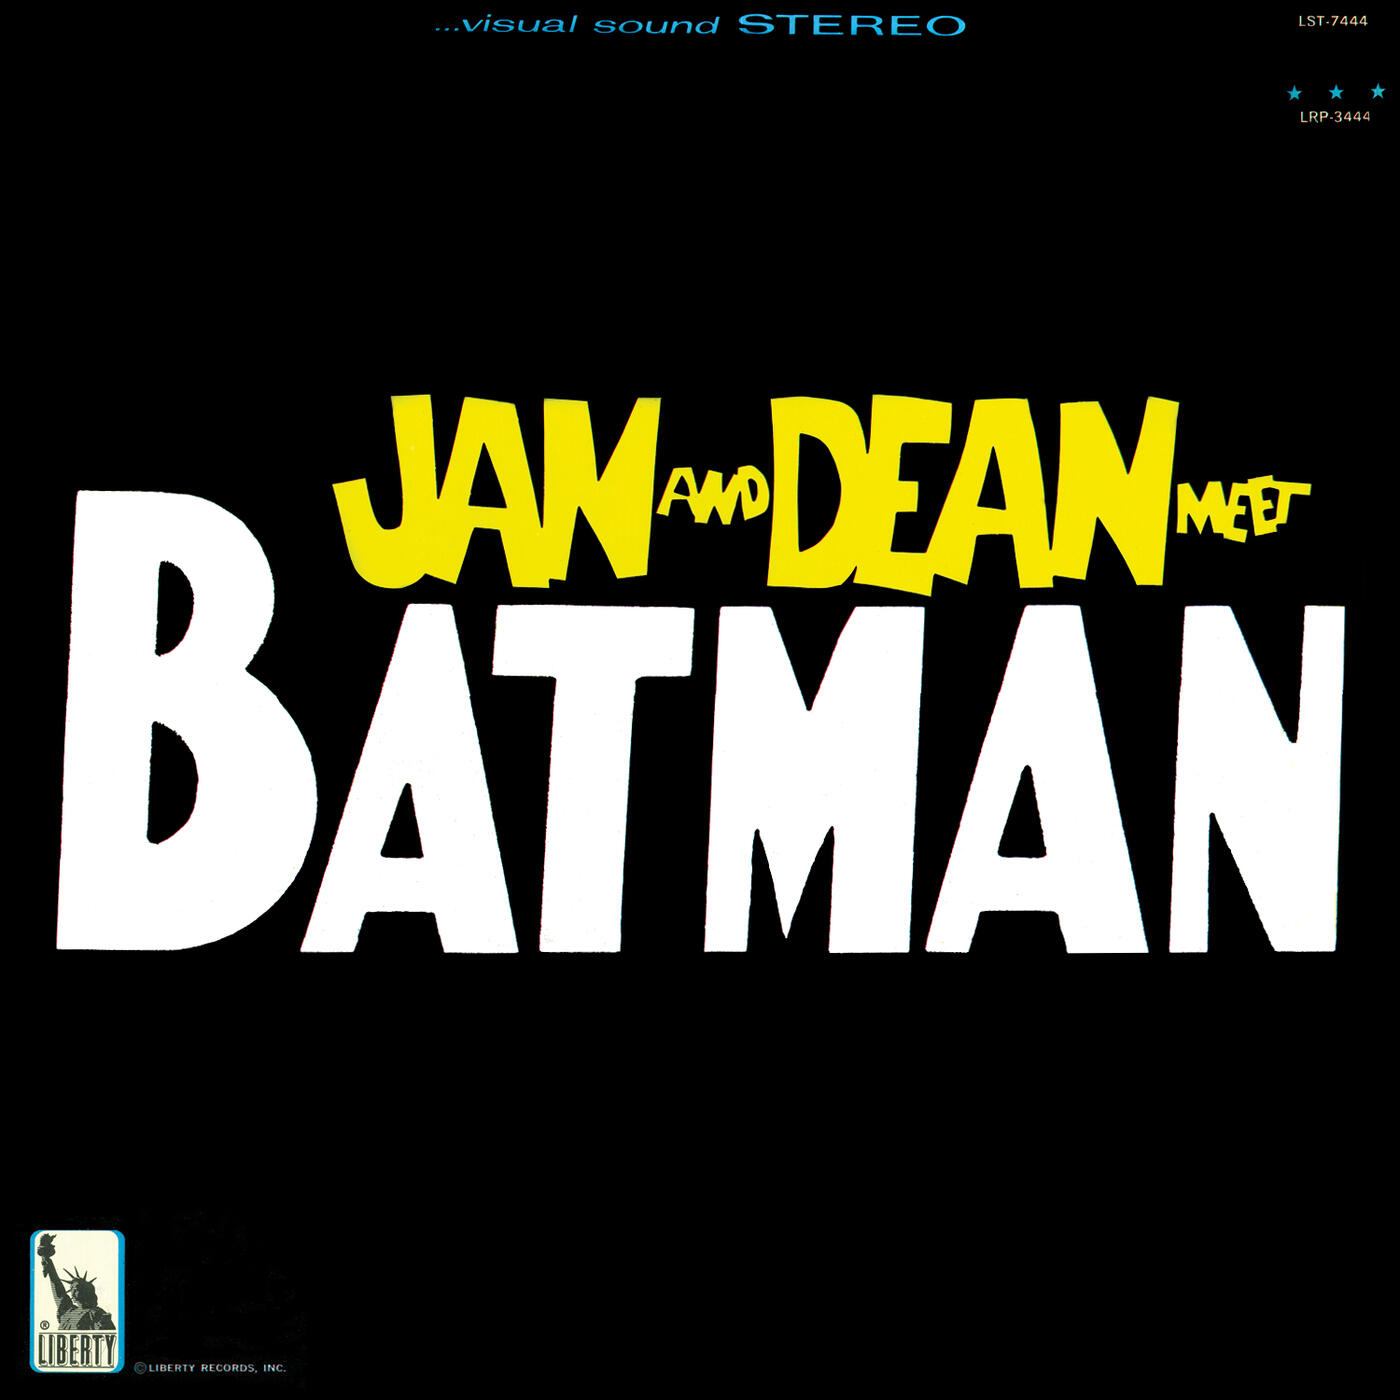 Listen Free To Jan And Dean Jan And Dean Meet Batman Radio On Iheartradio 4847